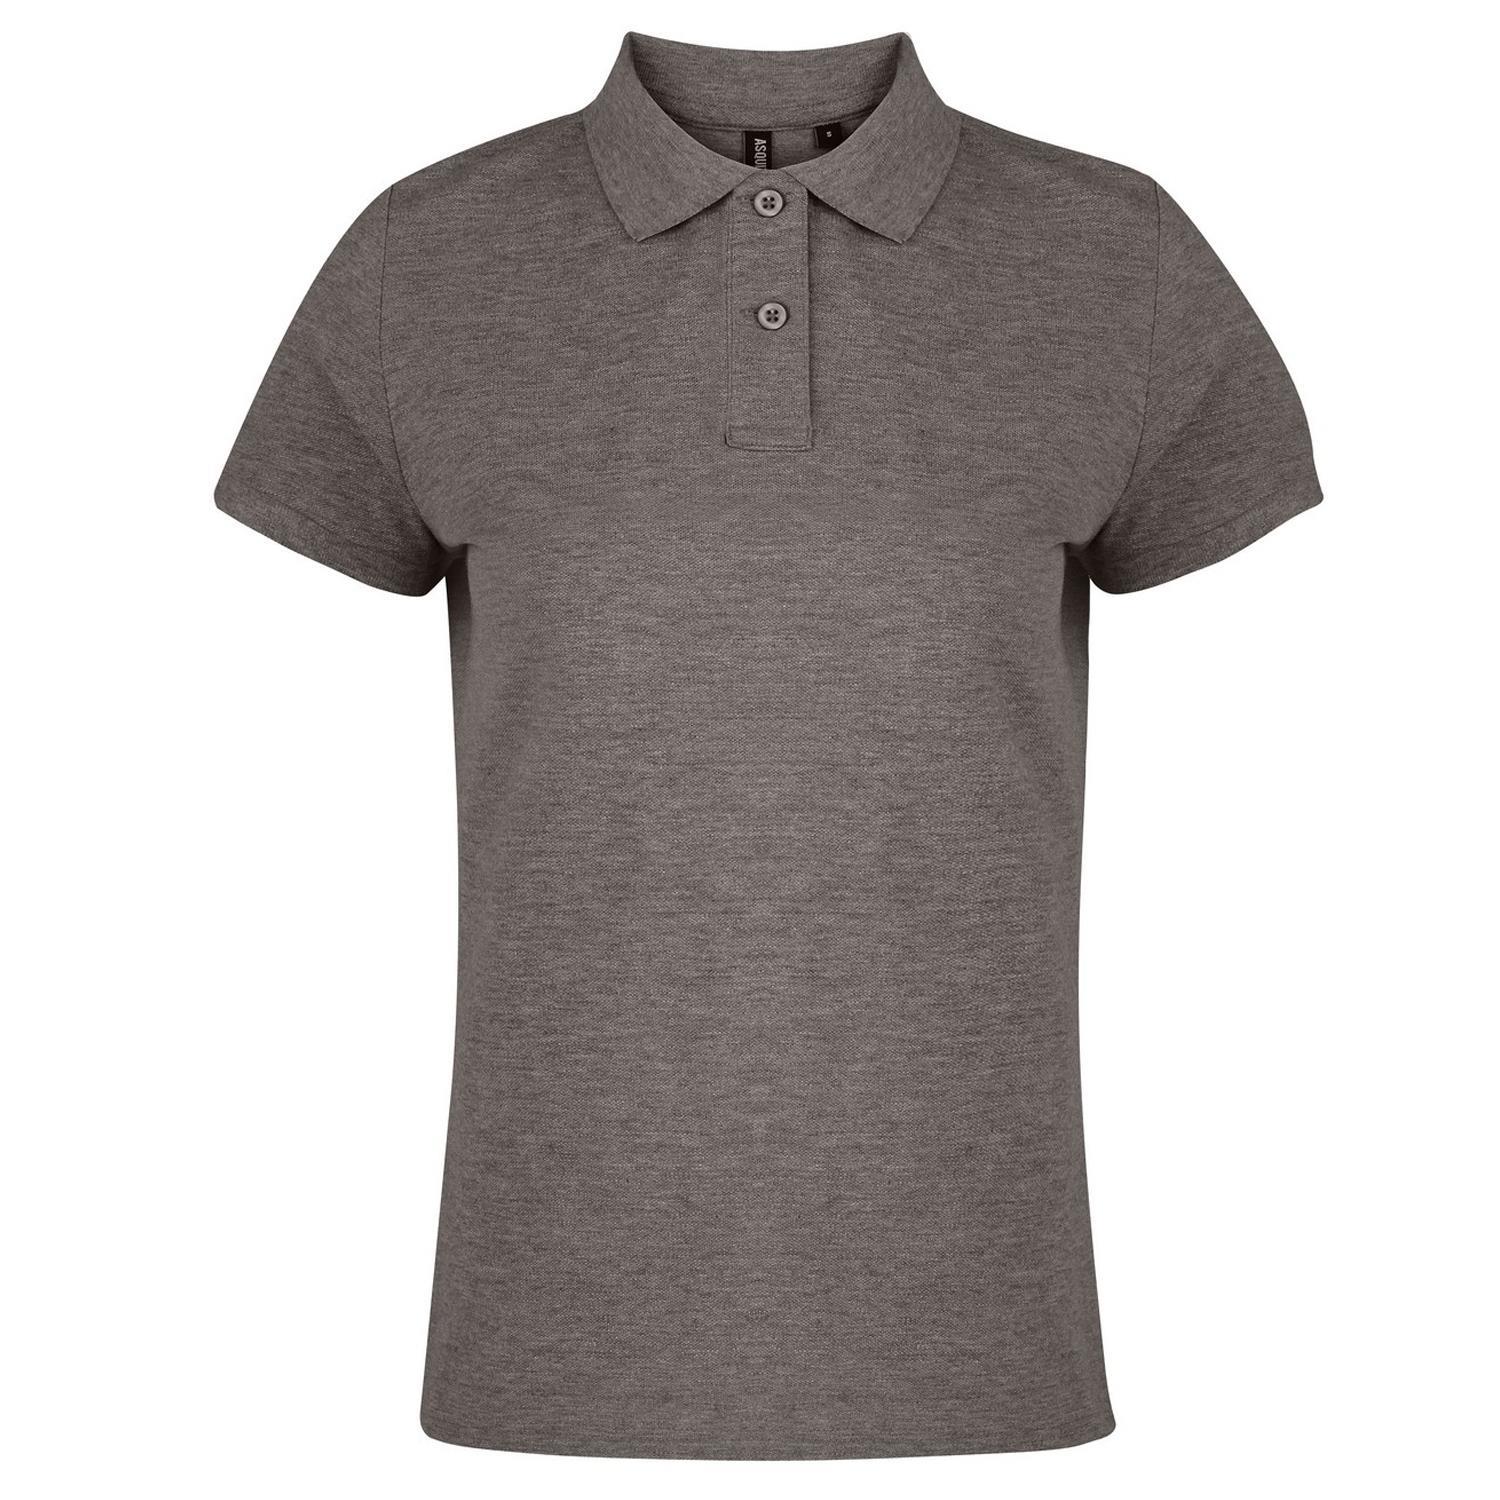 Asquith & Fox Womens/Ladies Plain Short Sleeve Polo Shirt (Charcoal) (XS)